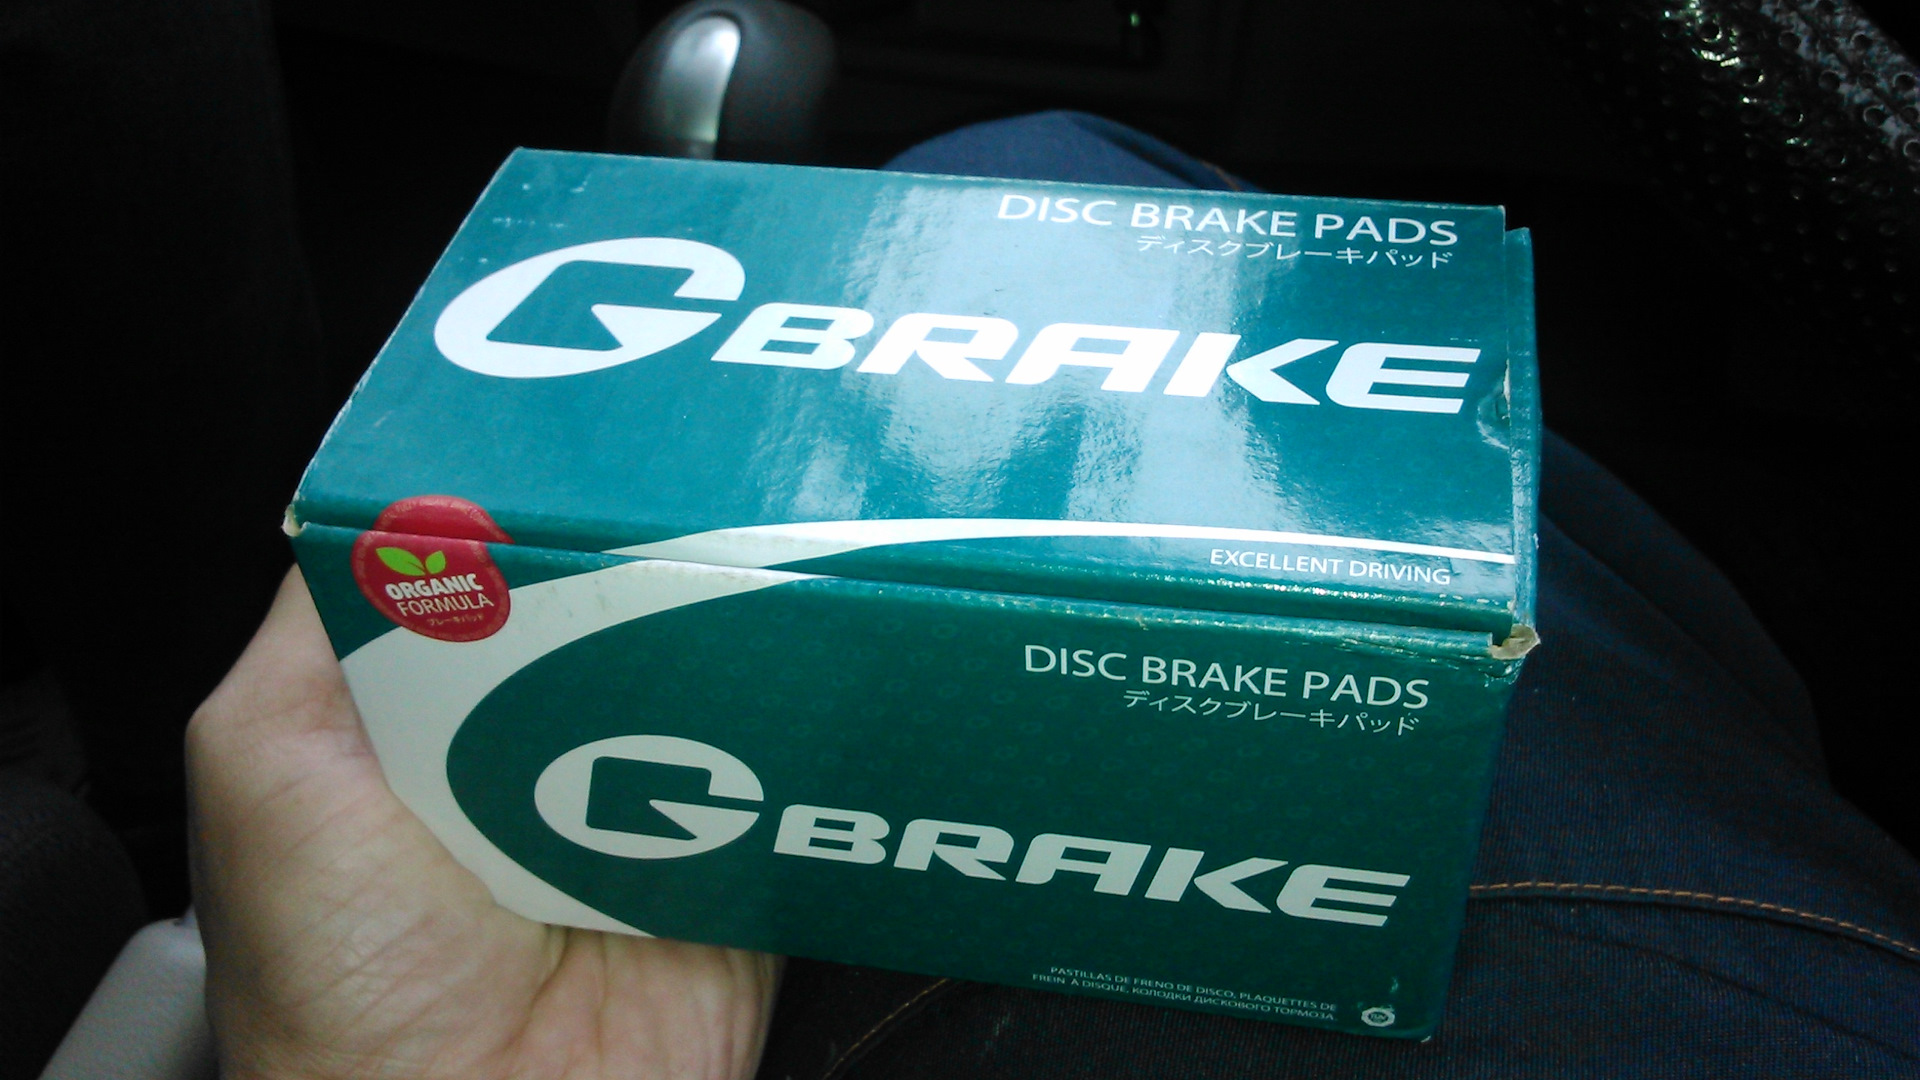 G brake производитель. Gd06451 g-Brake фото.